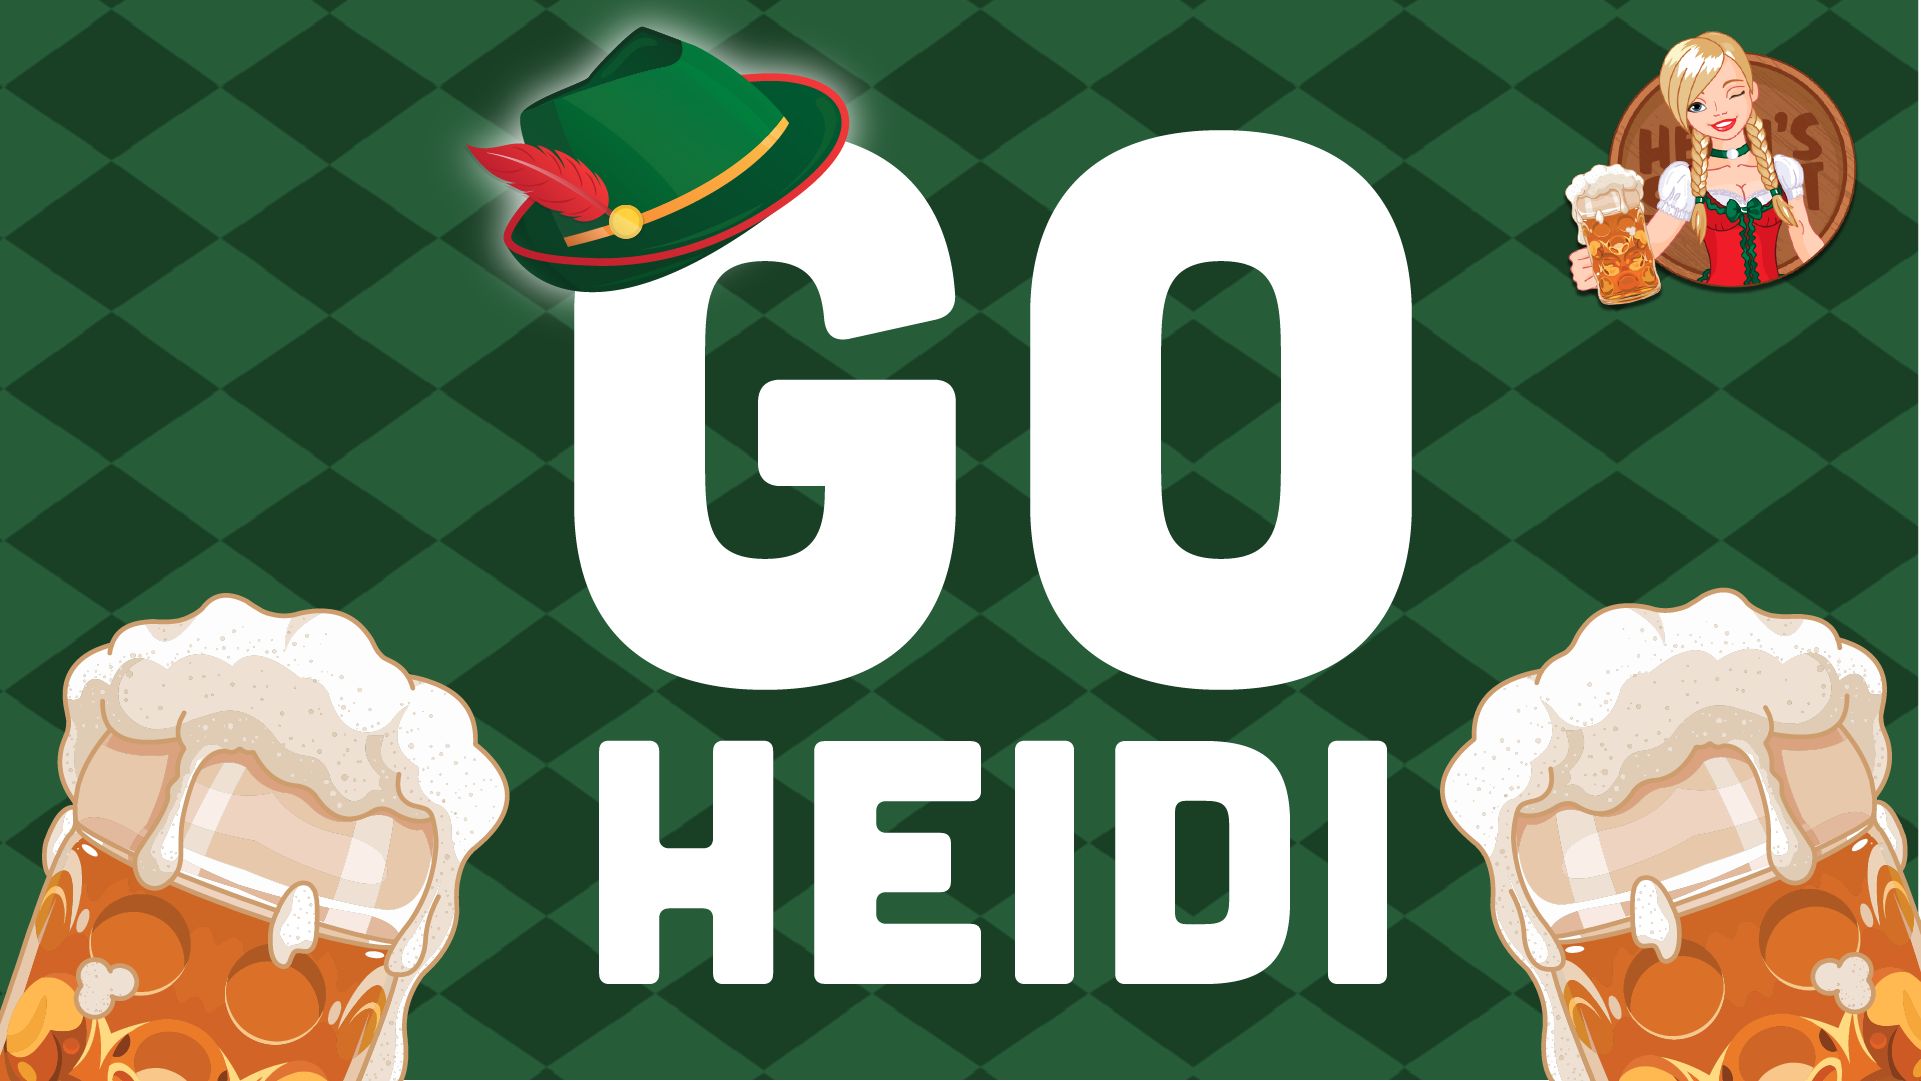 Go Heidi !!!